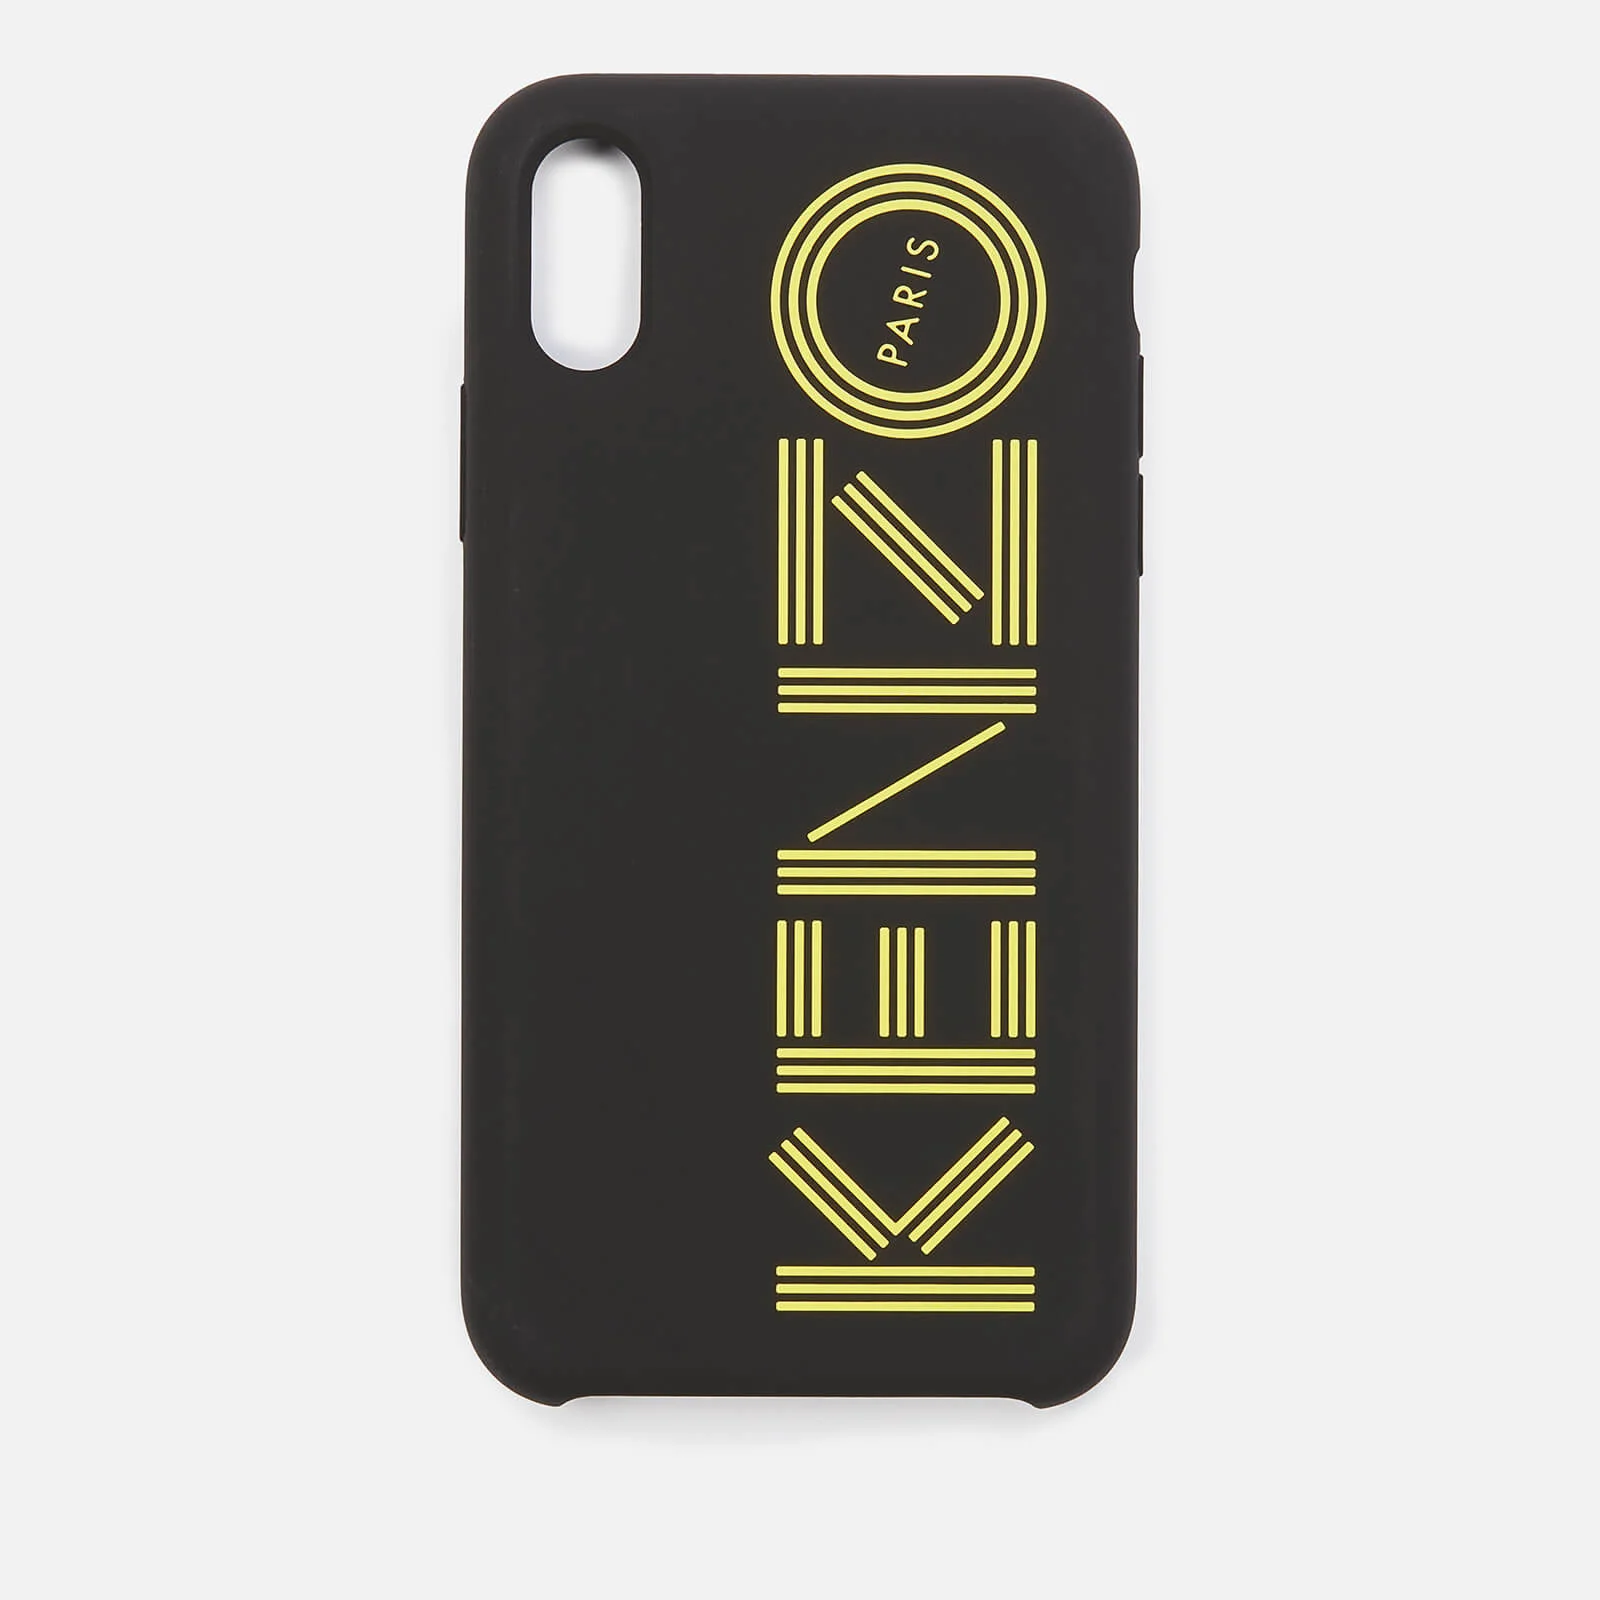 KENZO Men's Tonal Logo iPhone X Case - Black/Yellow Image 1